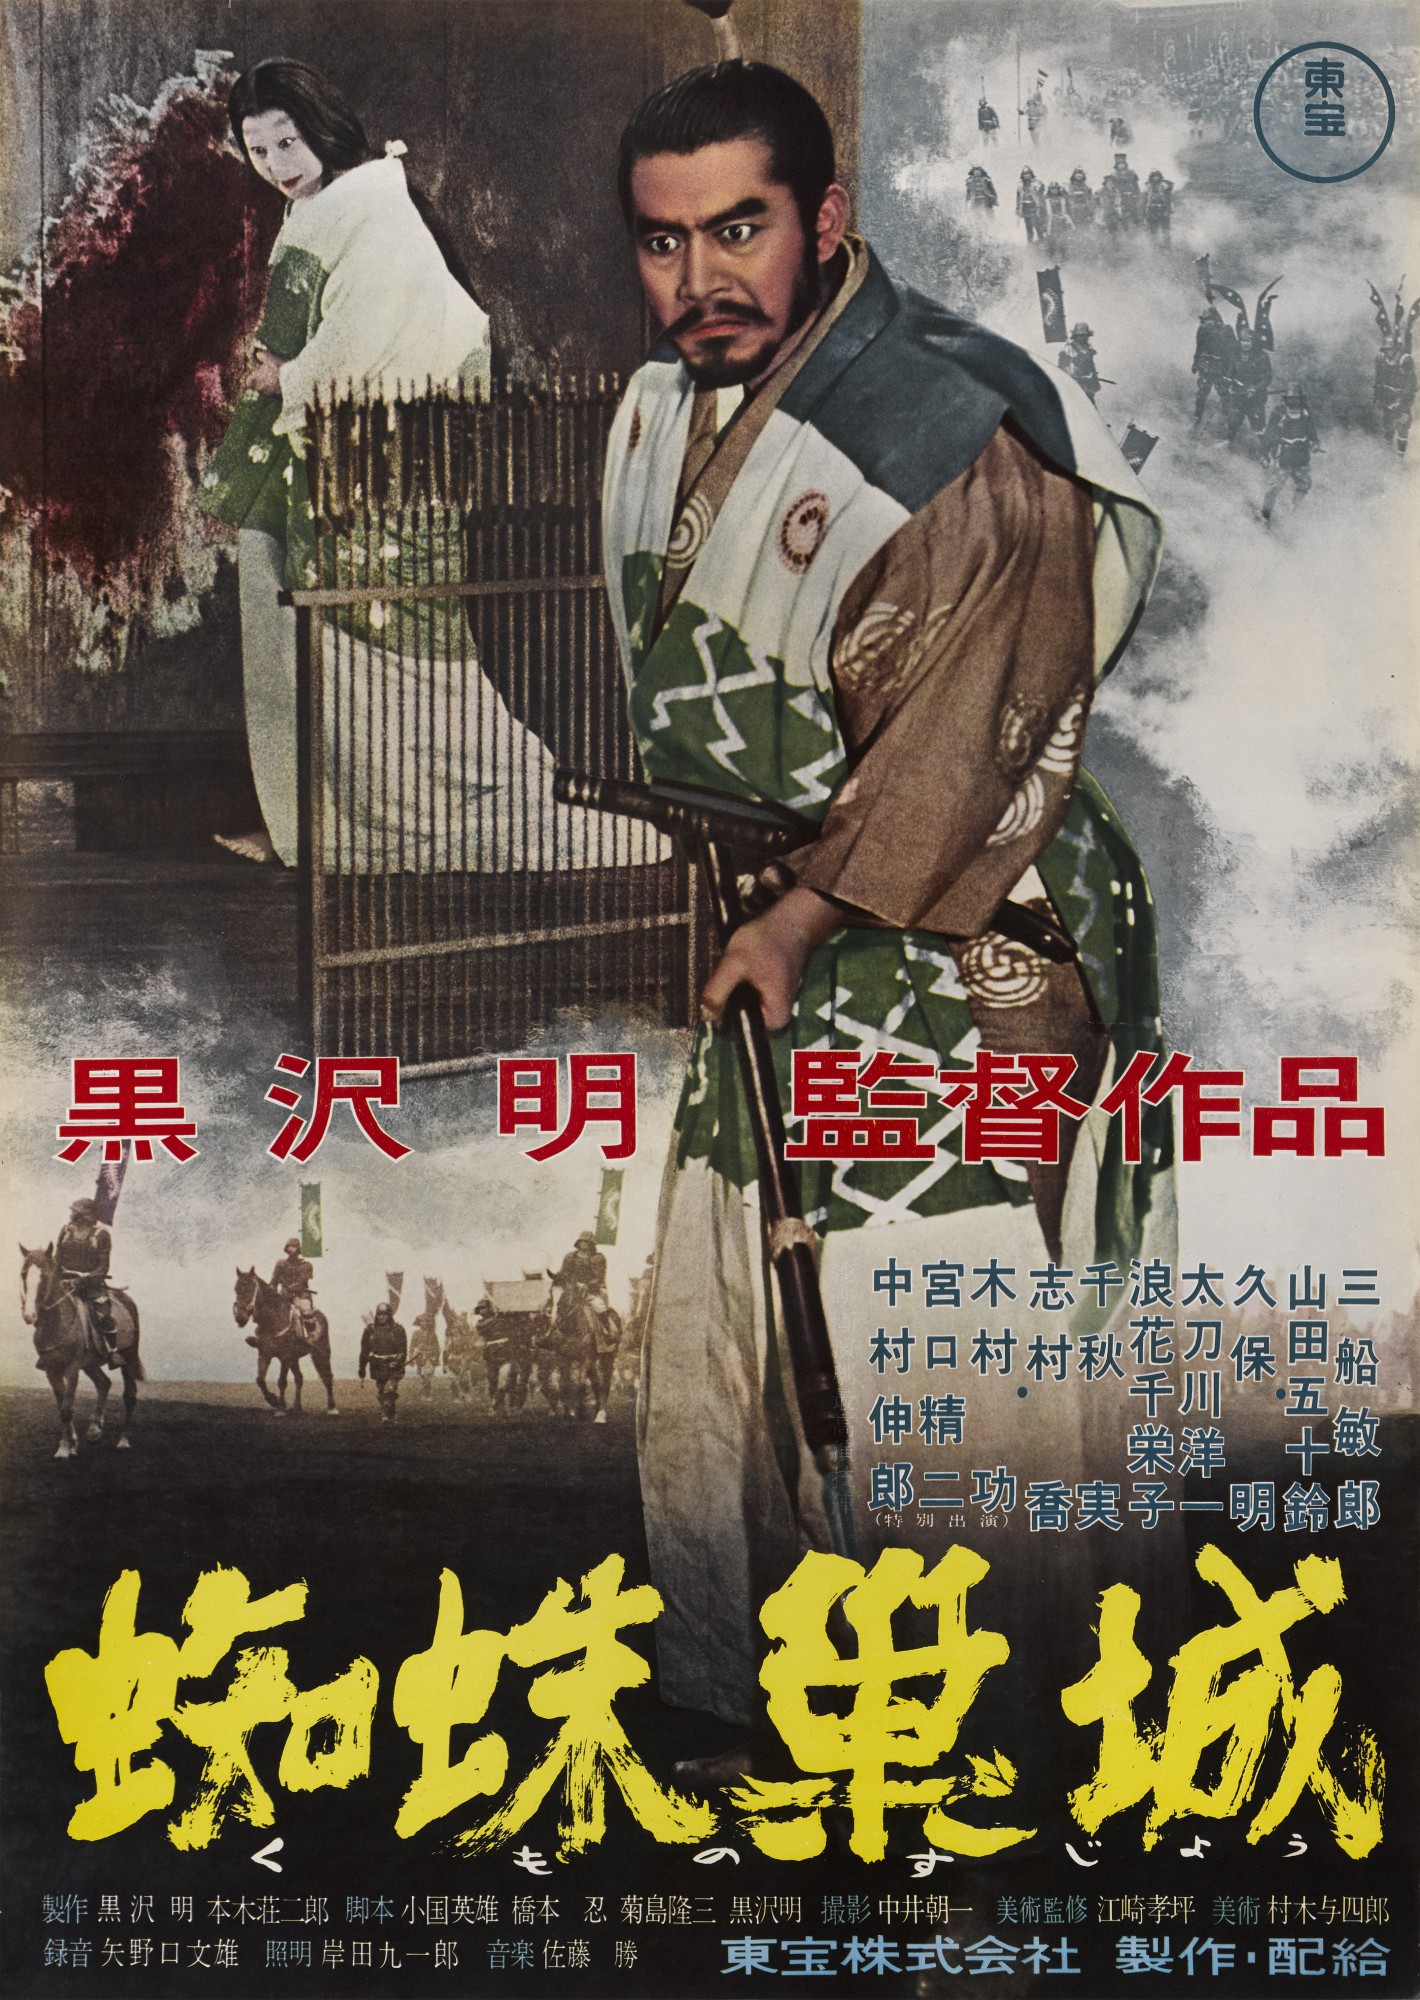 Throne of Blood - original Japanese film poster